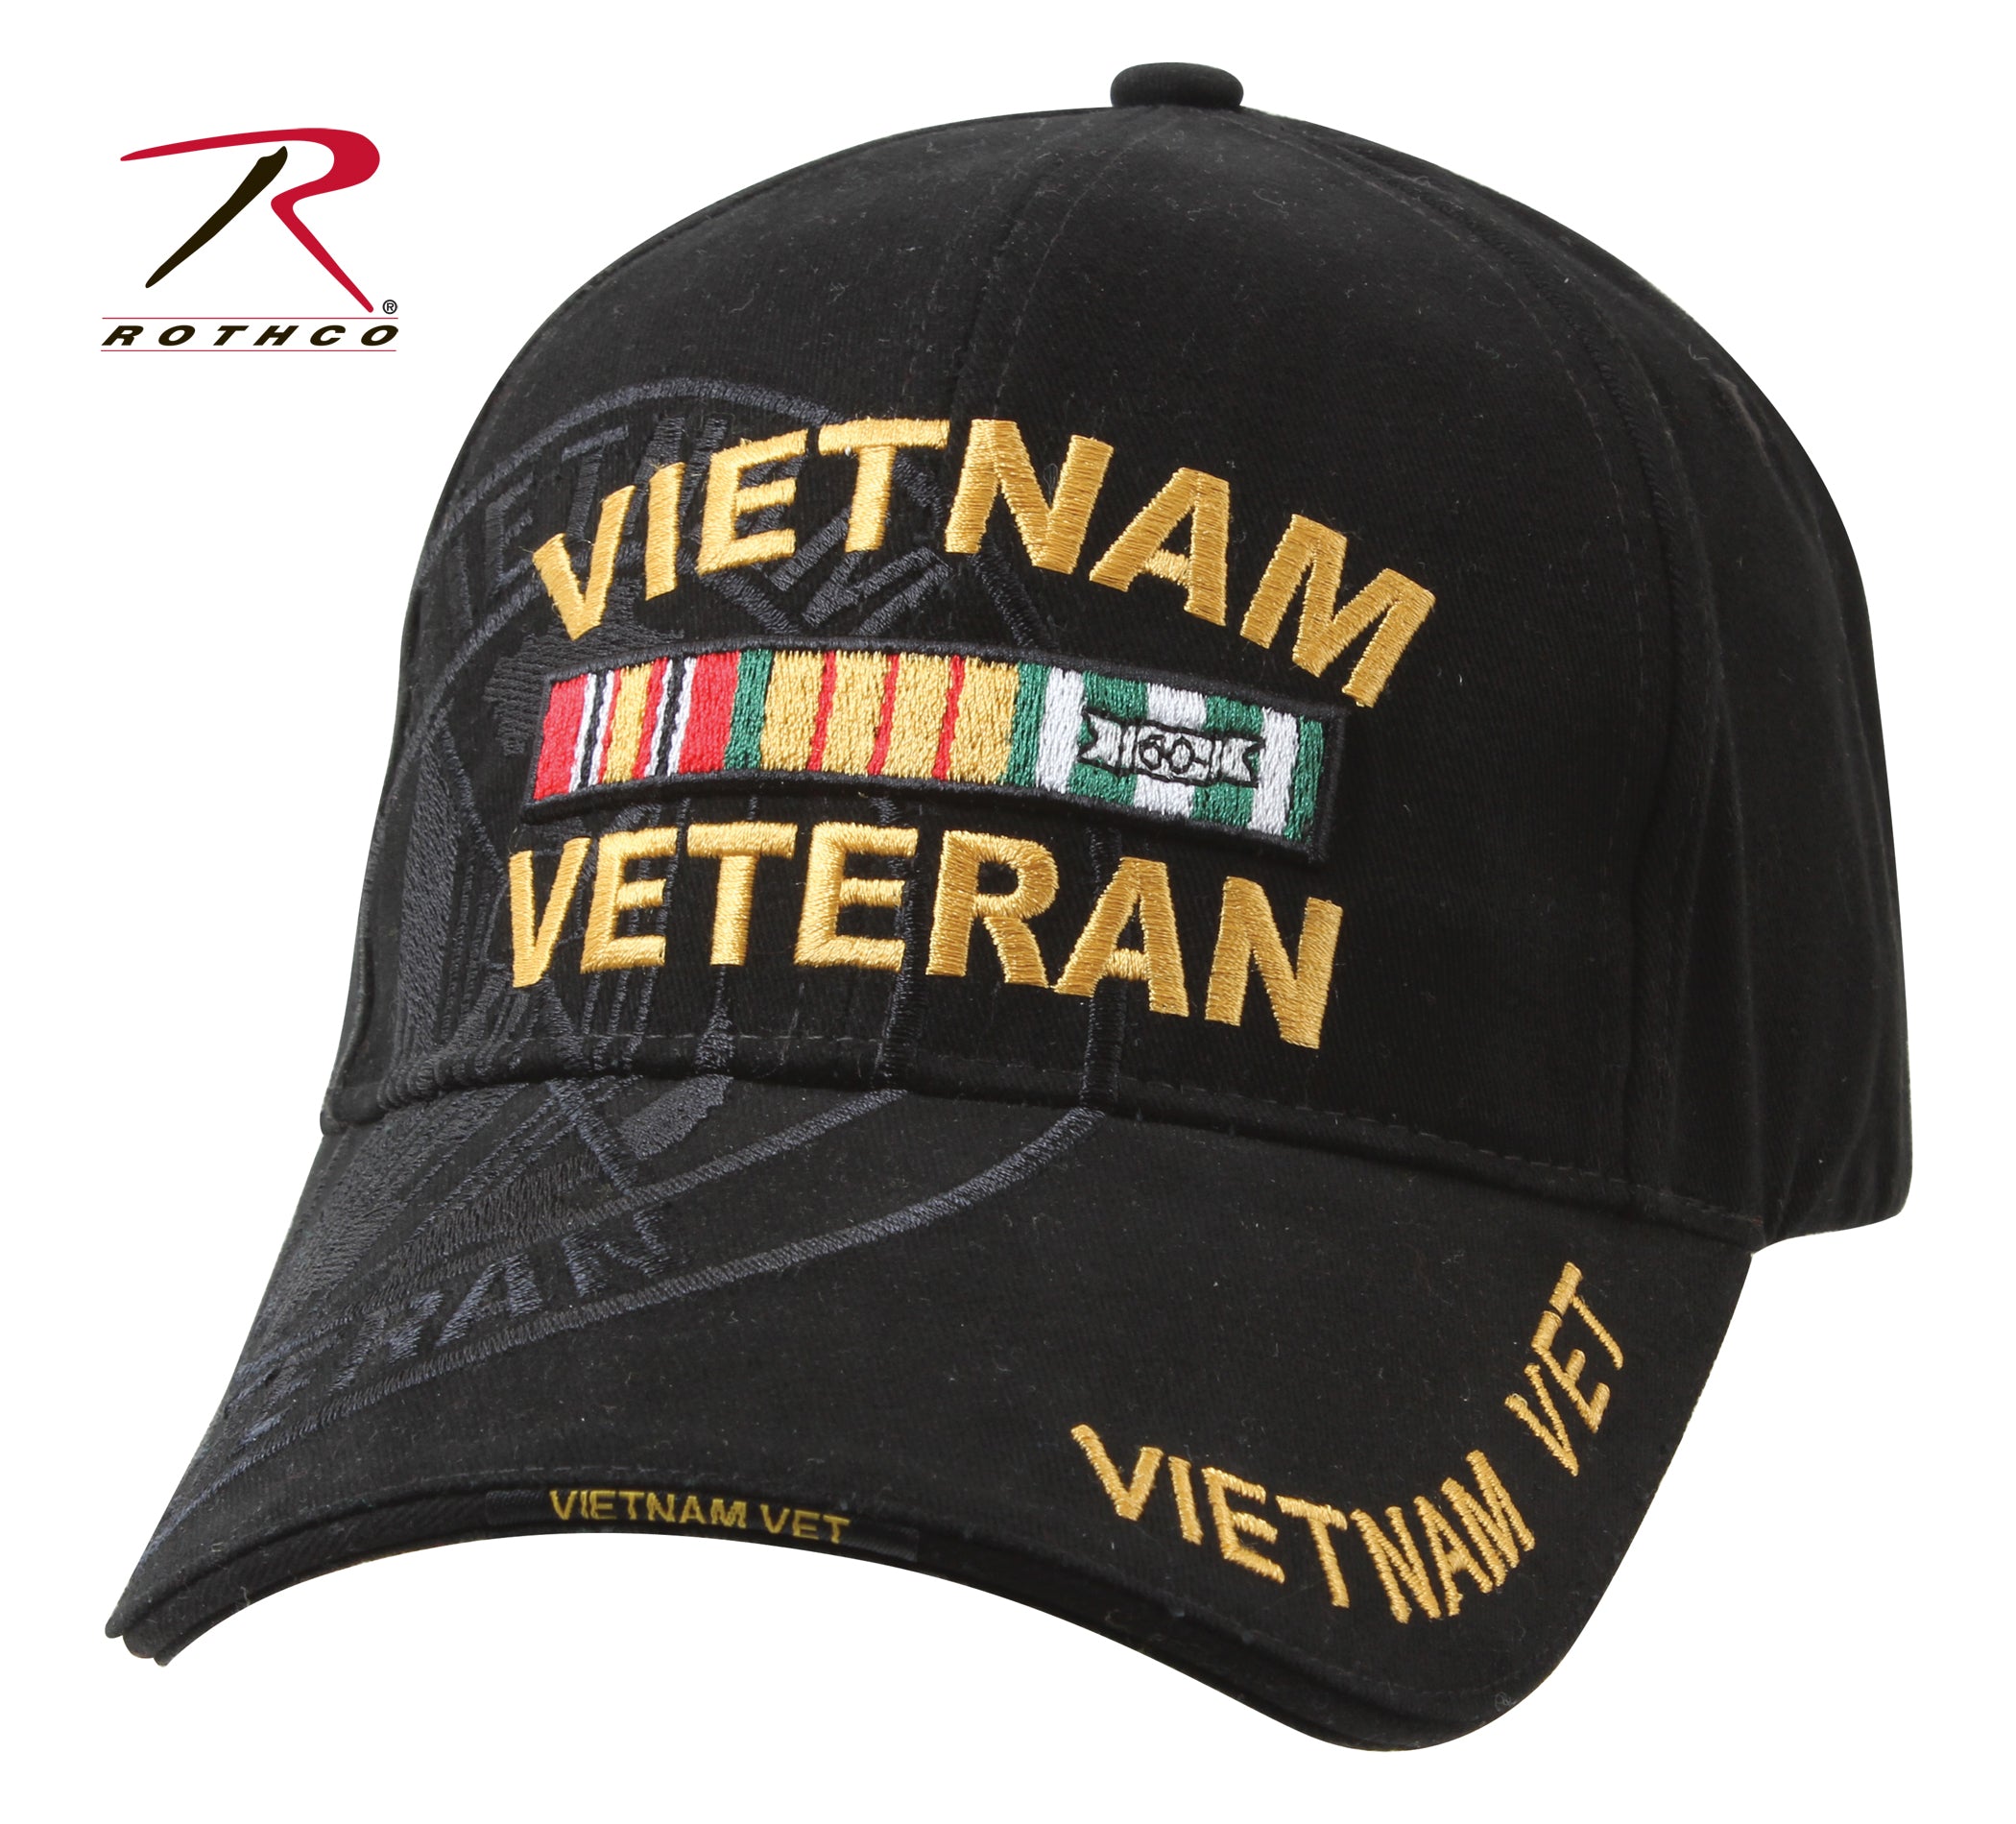 Rothco Deluxe Vietnam Veteran Military Low Profile Shadow Cap